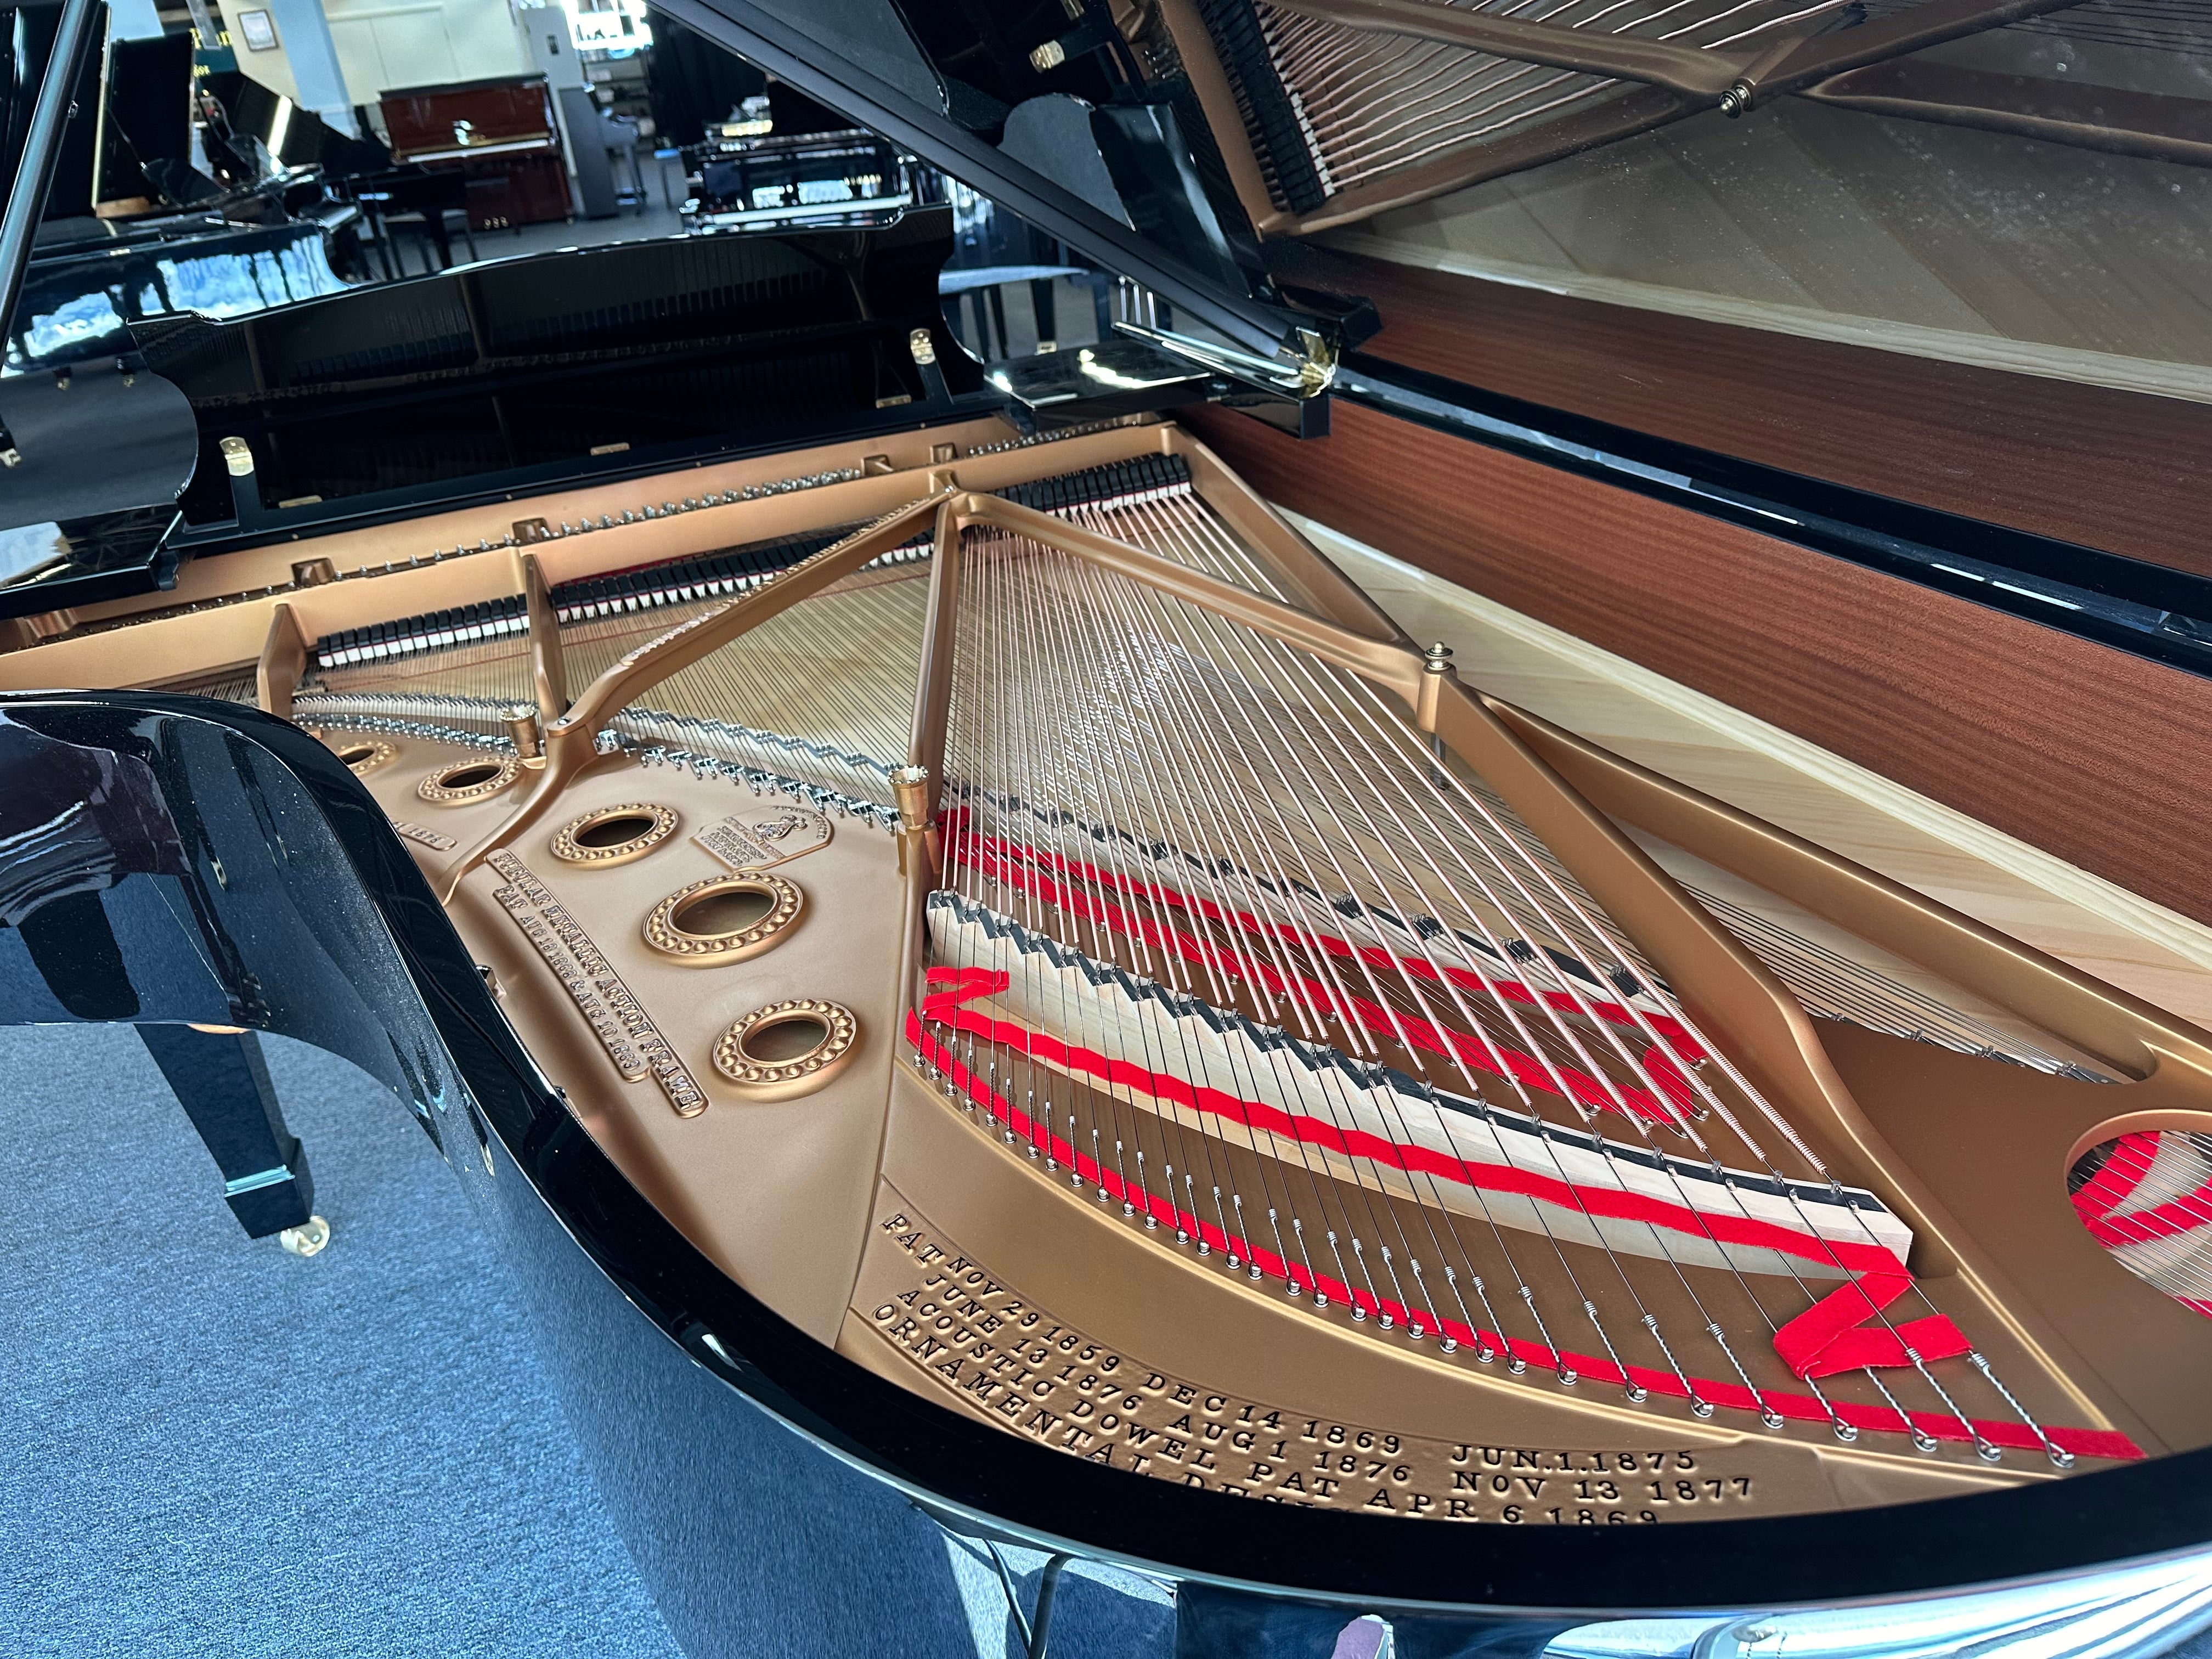 1902 Steinway Model B 6'10" Grand Piano in Polished Ebony Finish